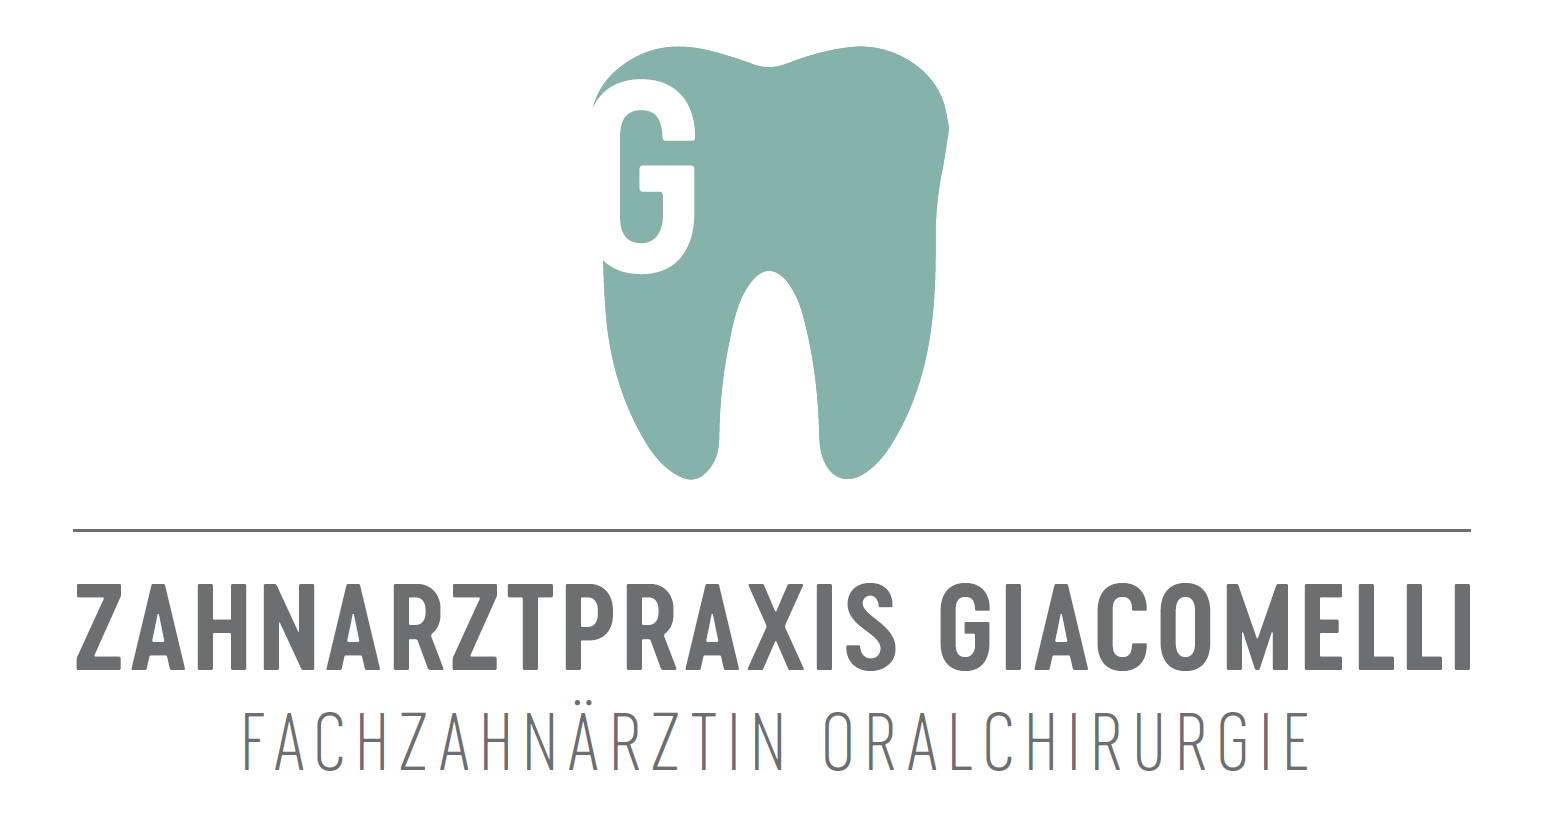 Zahnarztpraxis Giacomelli